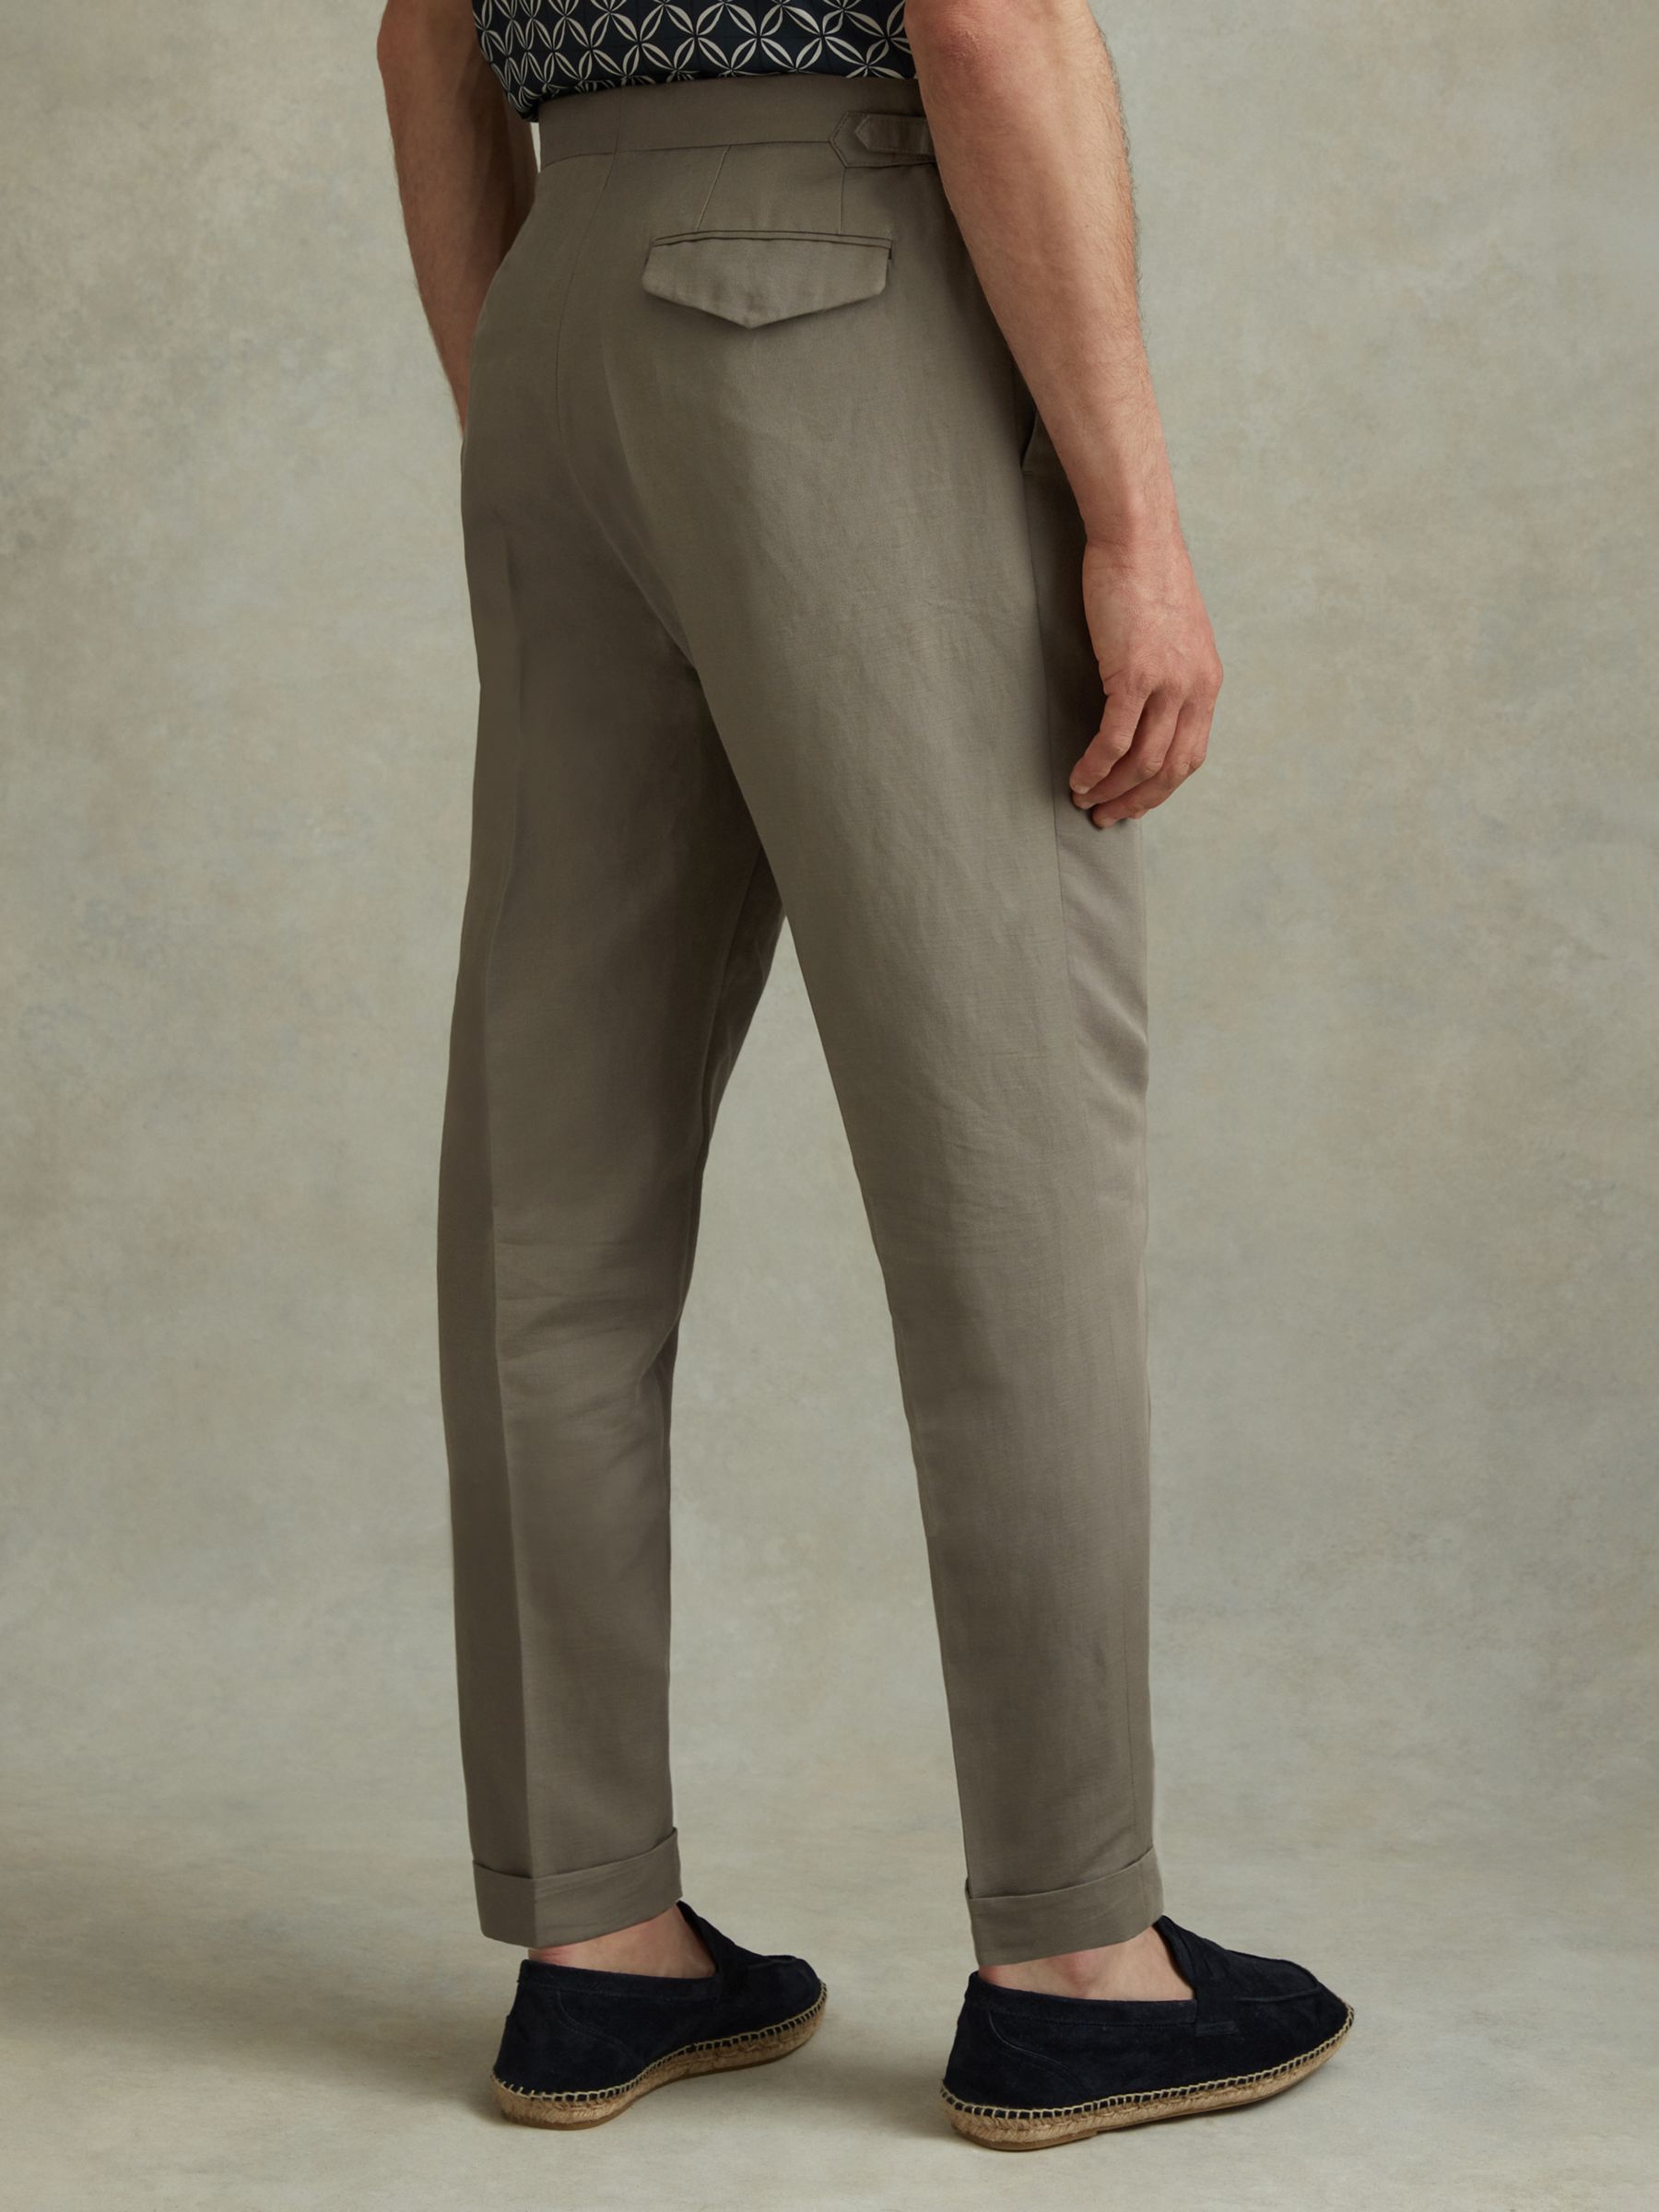 Reiss Com Linen Blend Trousers, Light Khaki, 28R